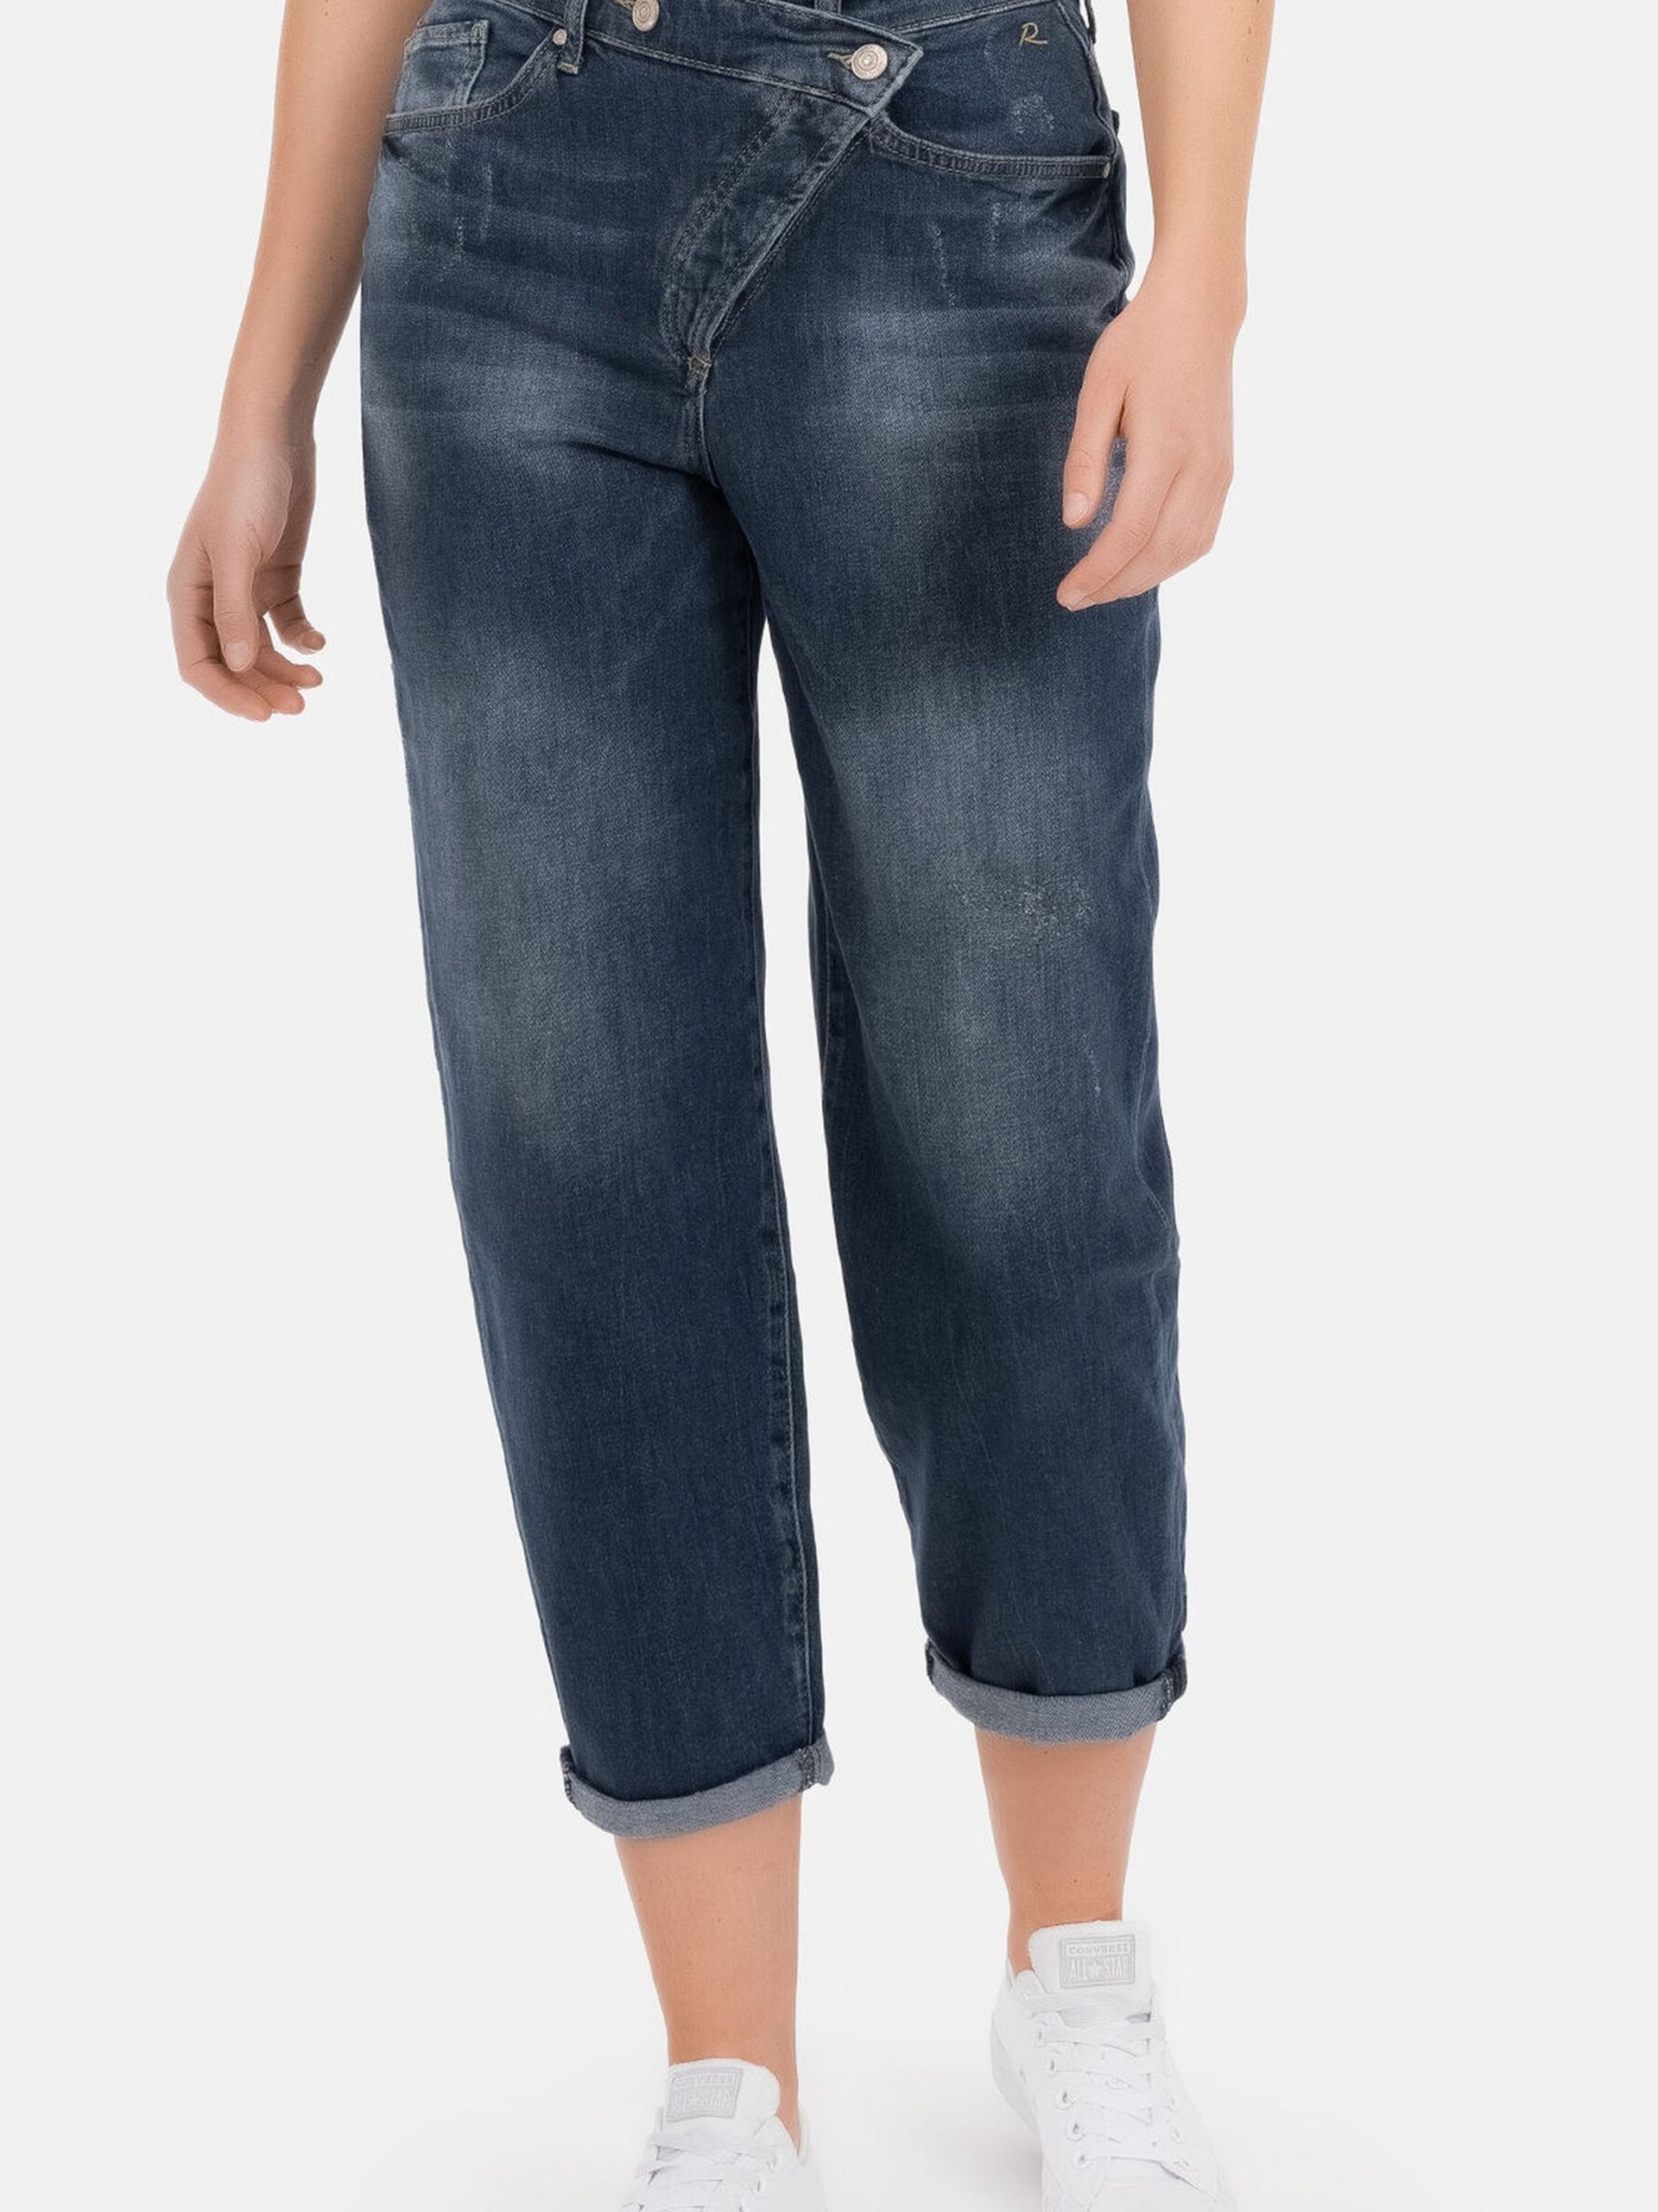 Gianna Damen 7/8-Jeans online kaufen RECOVER pants -